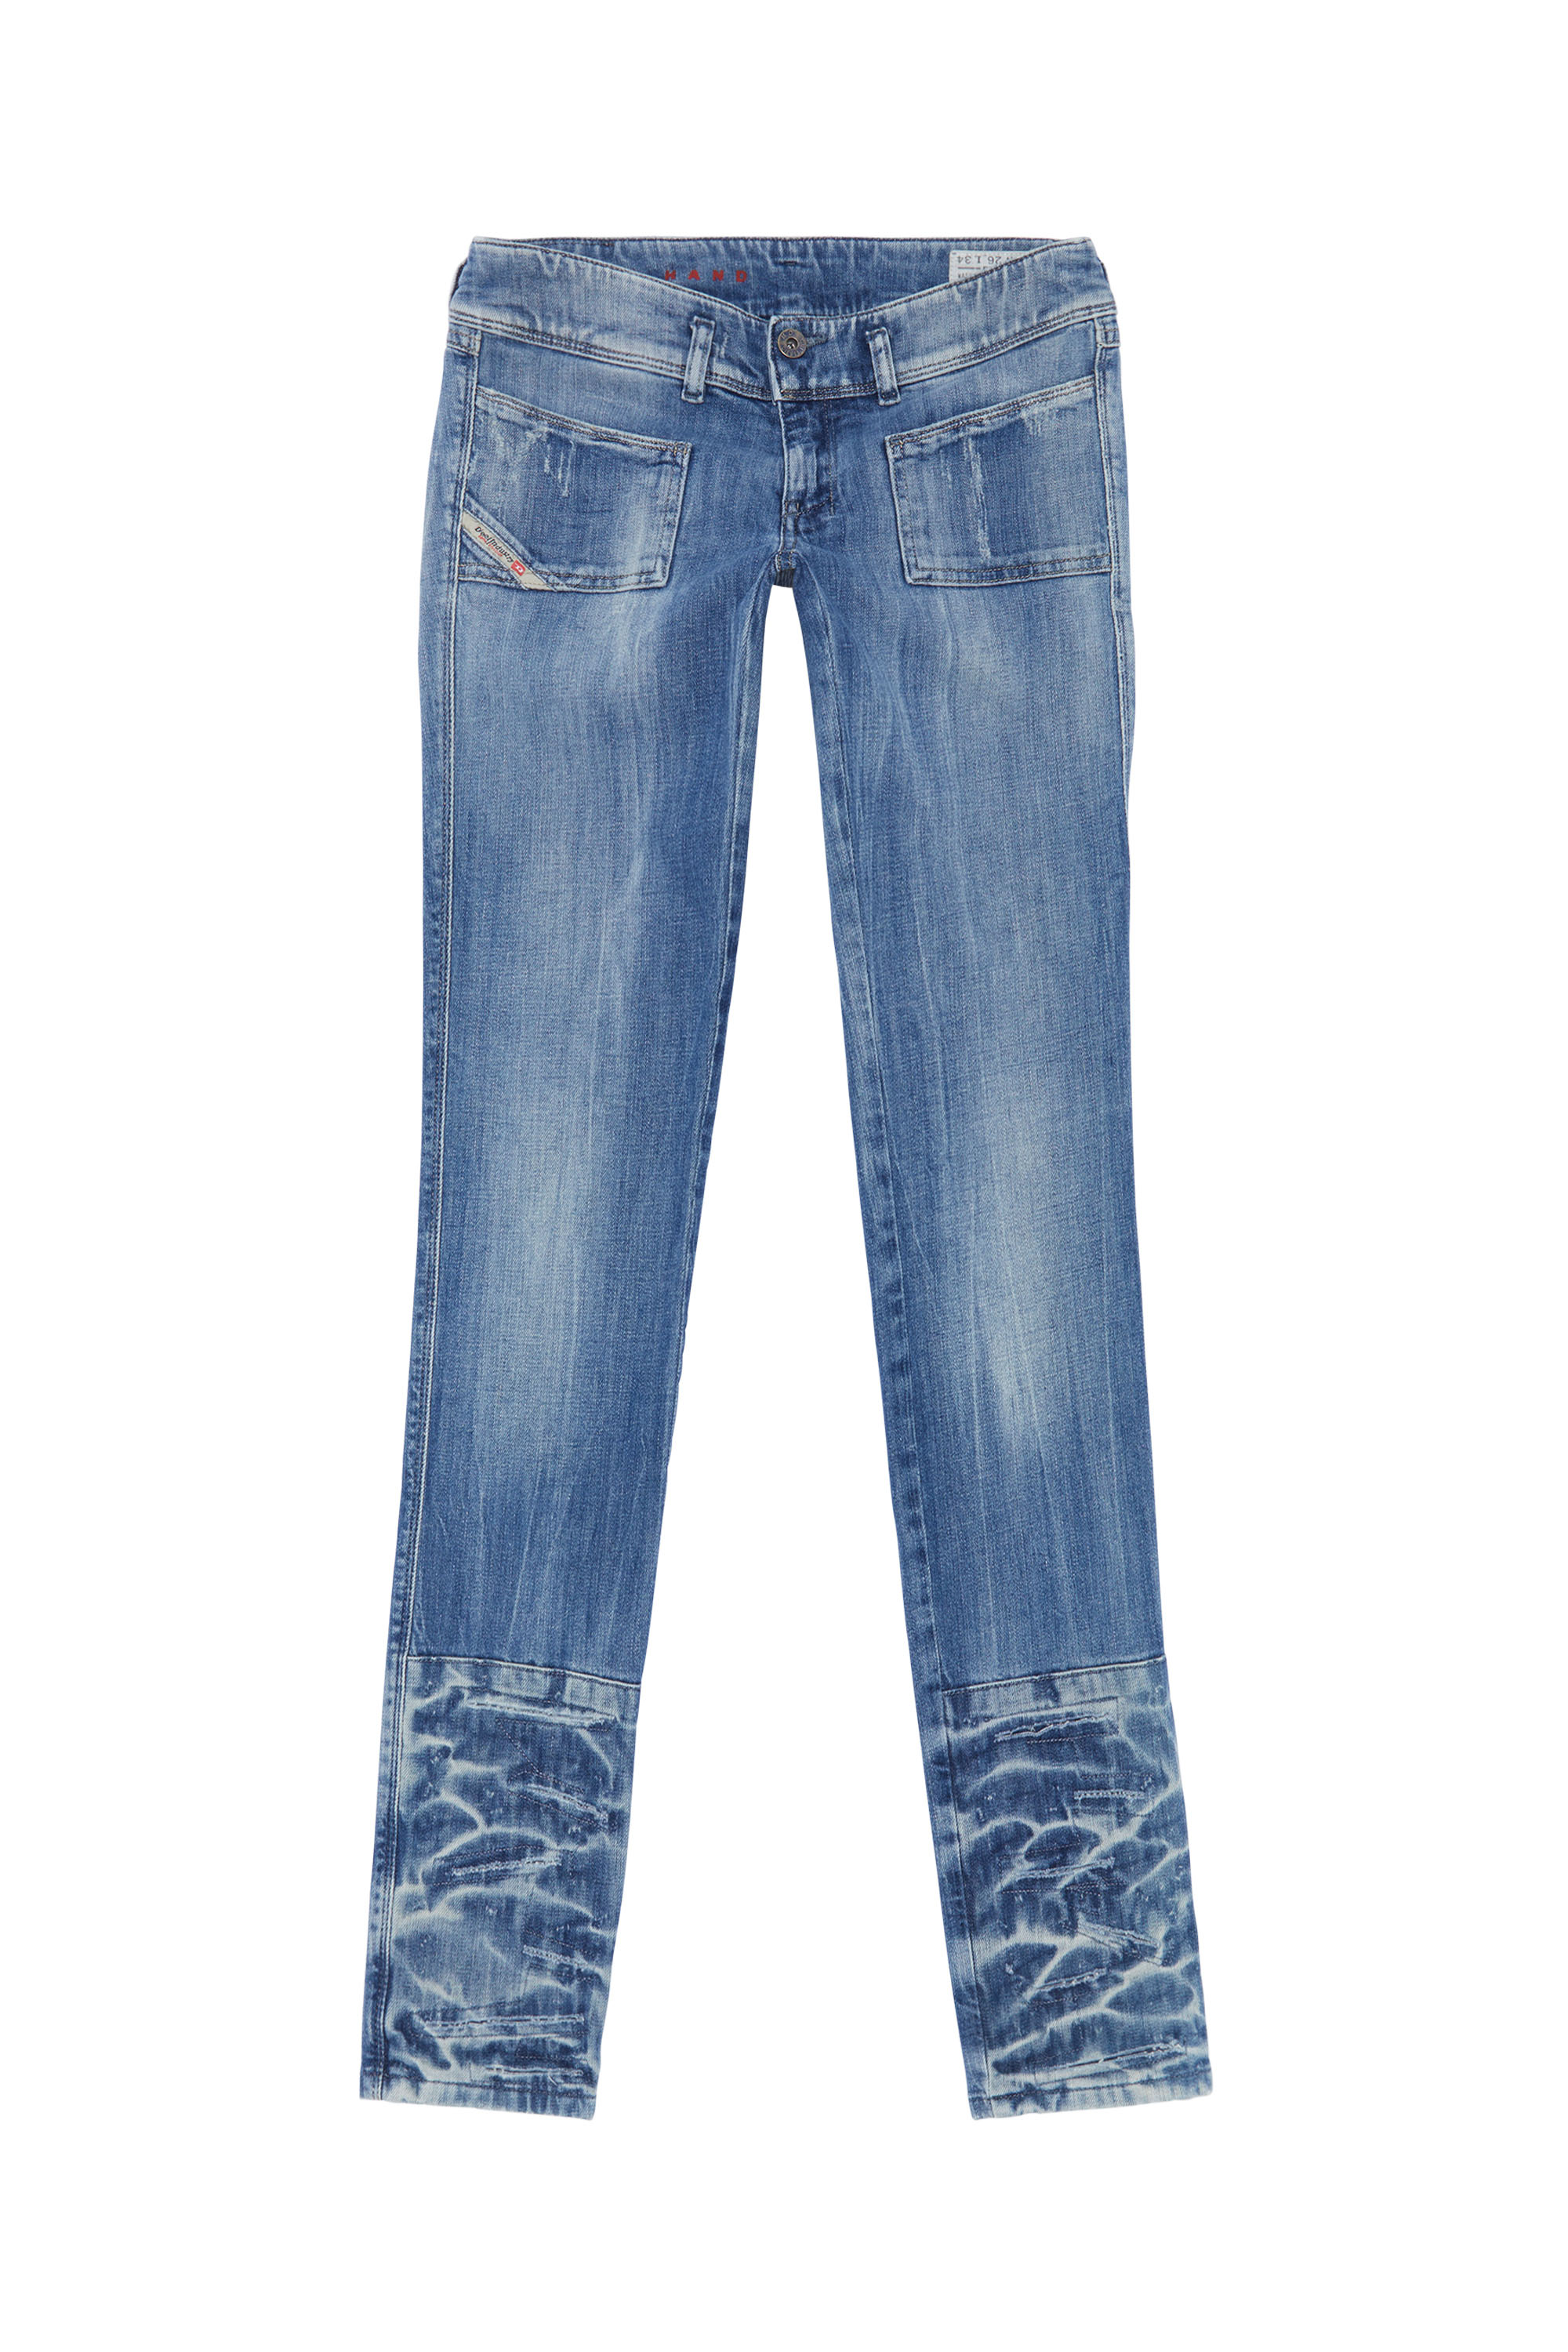 Diesel - Damen - Jeans Mittelblau - Jeans - Damen - Blau